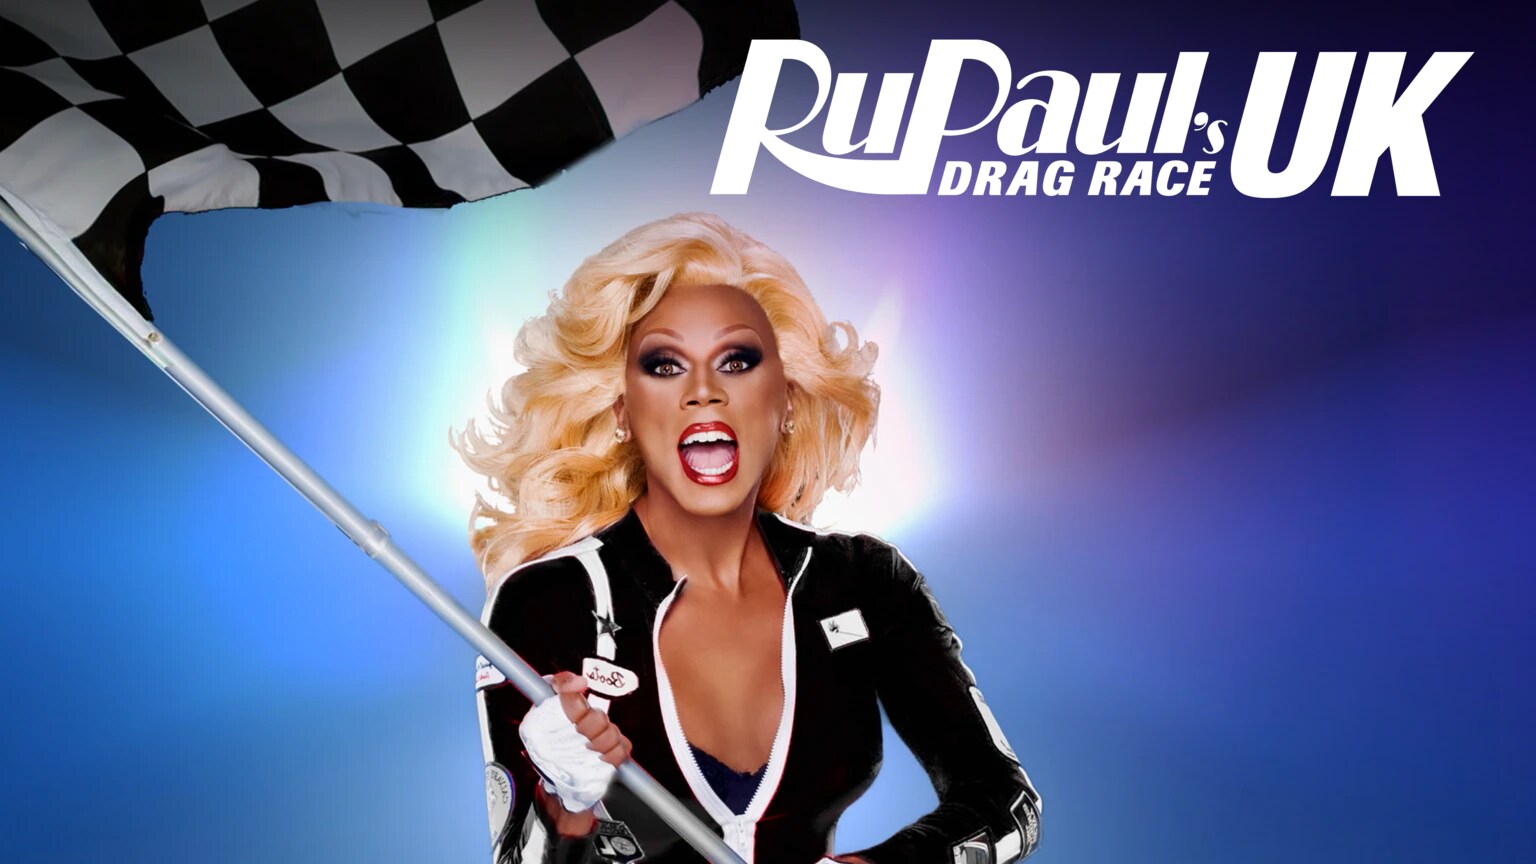 Ru Paul's Drag Race